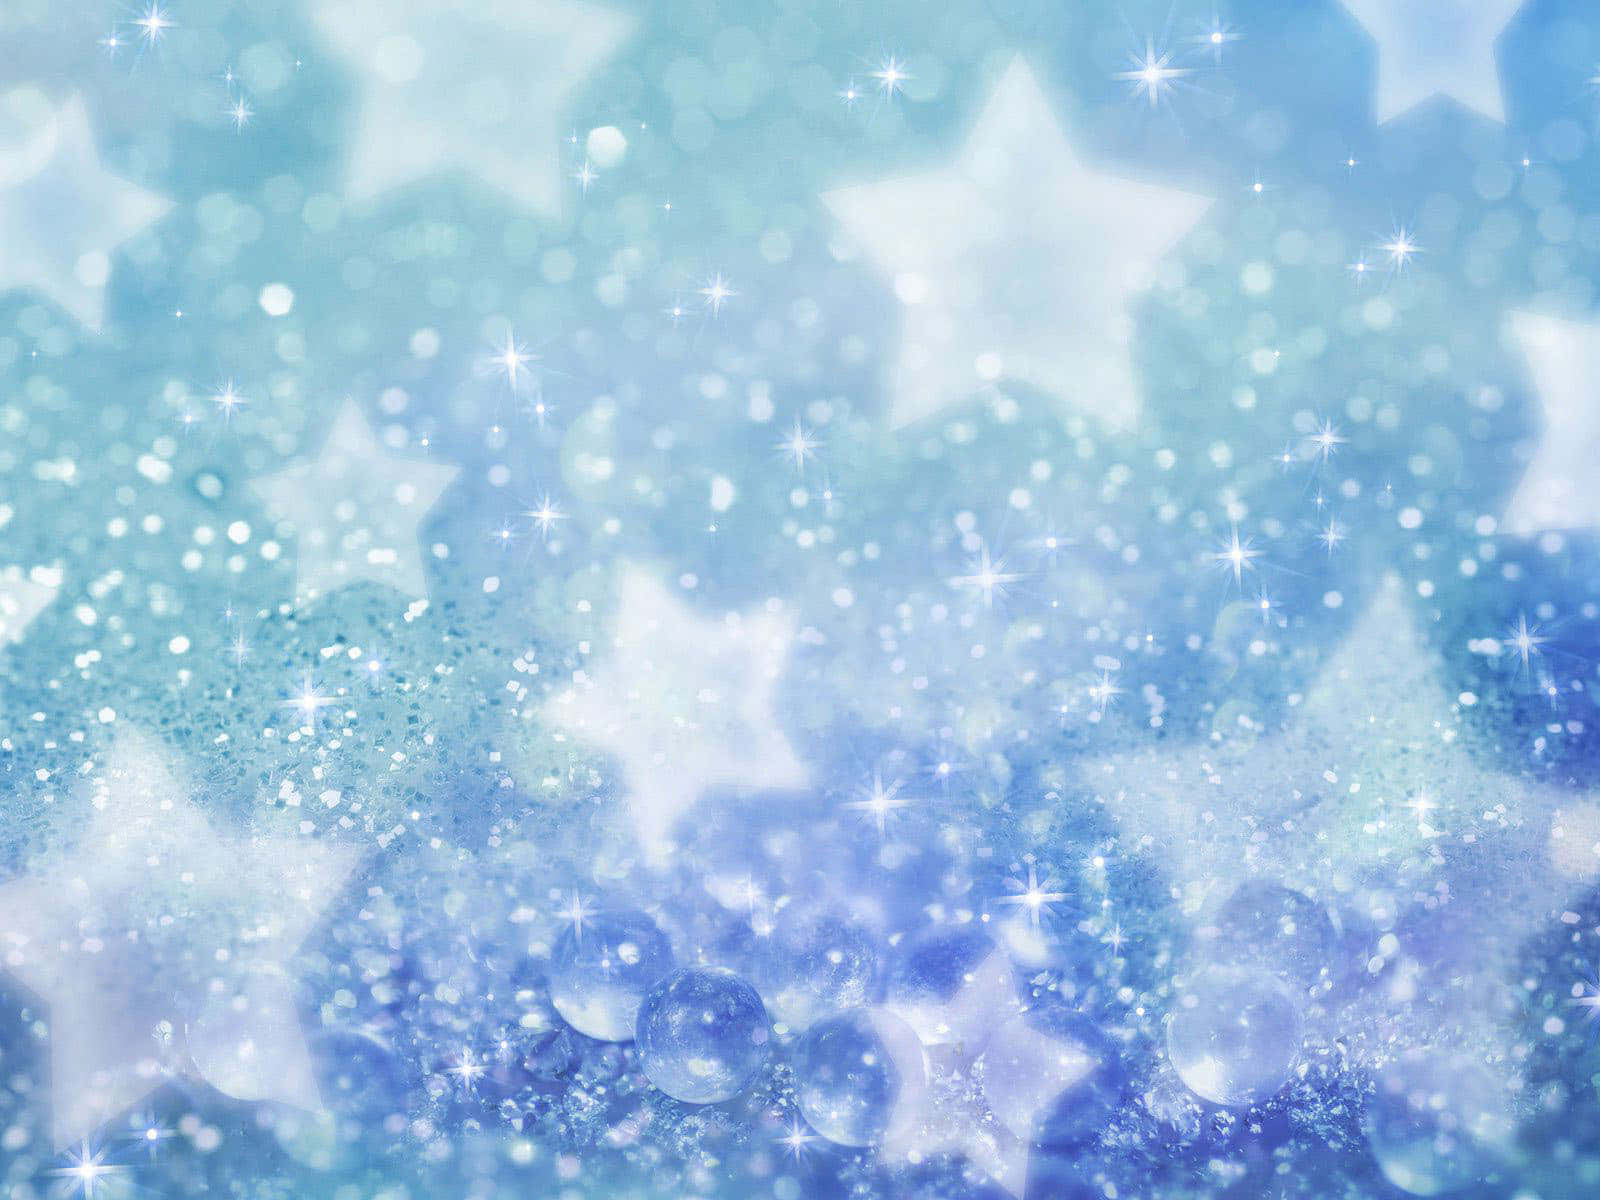 Light Blue Satin Glitter Background Graphic by Rizu Designs